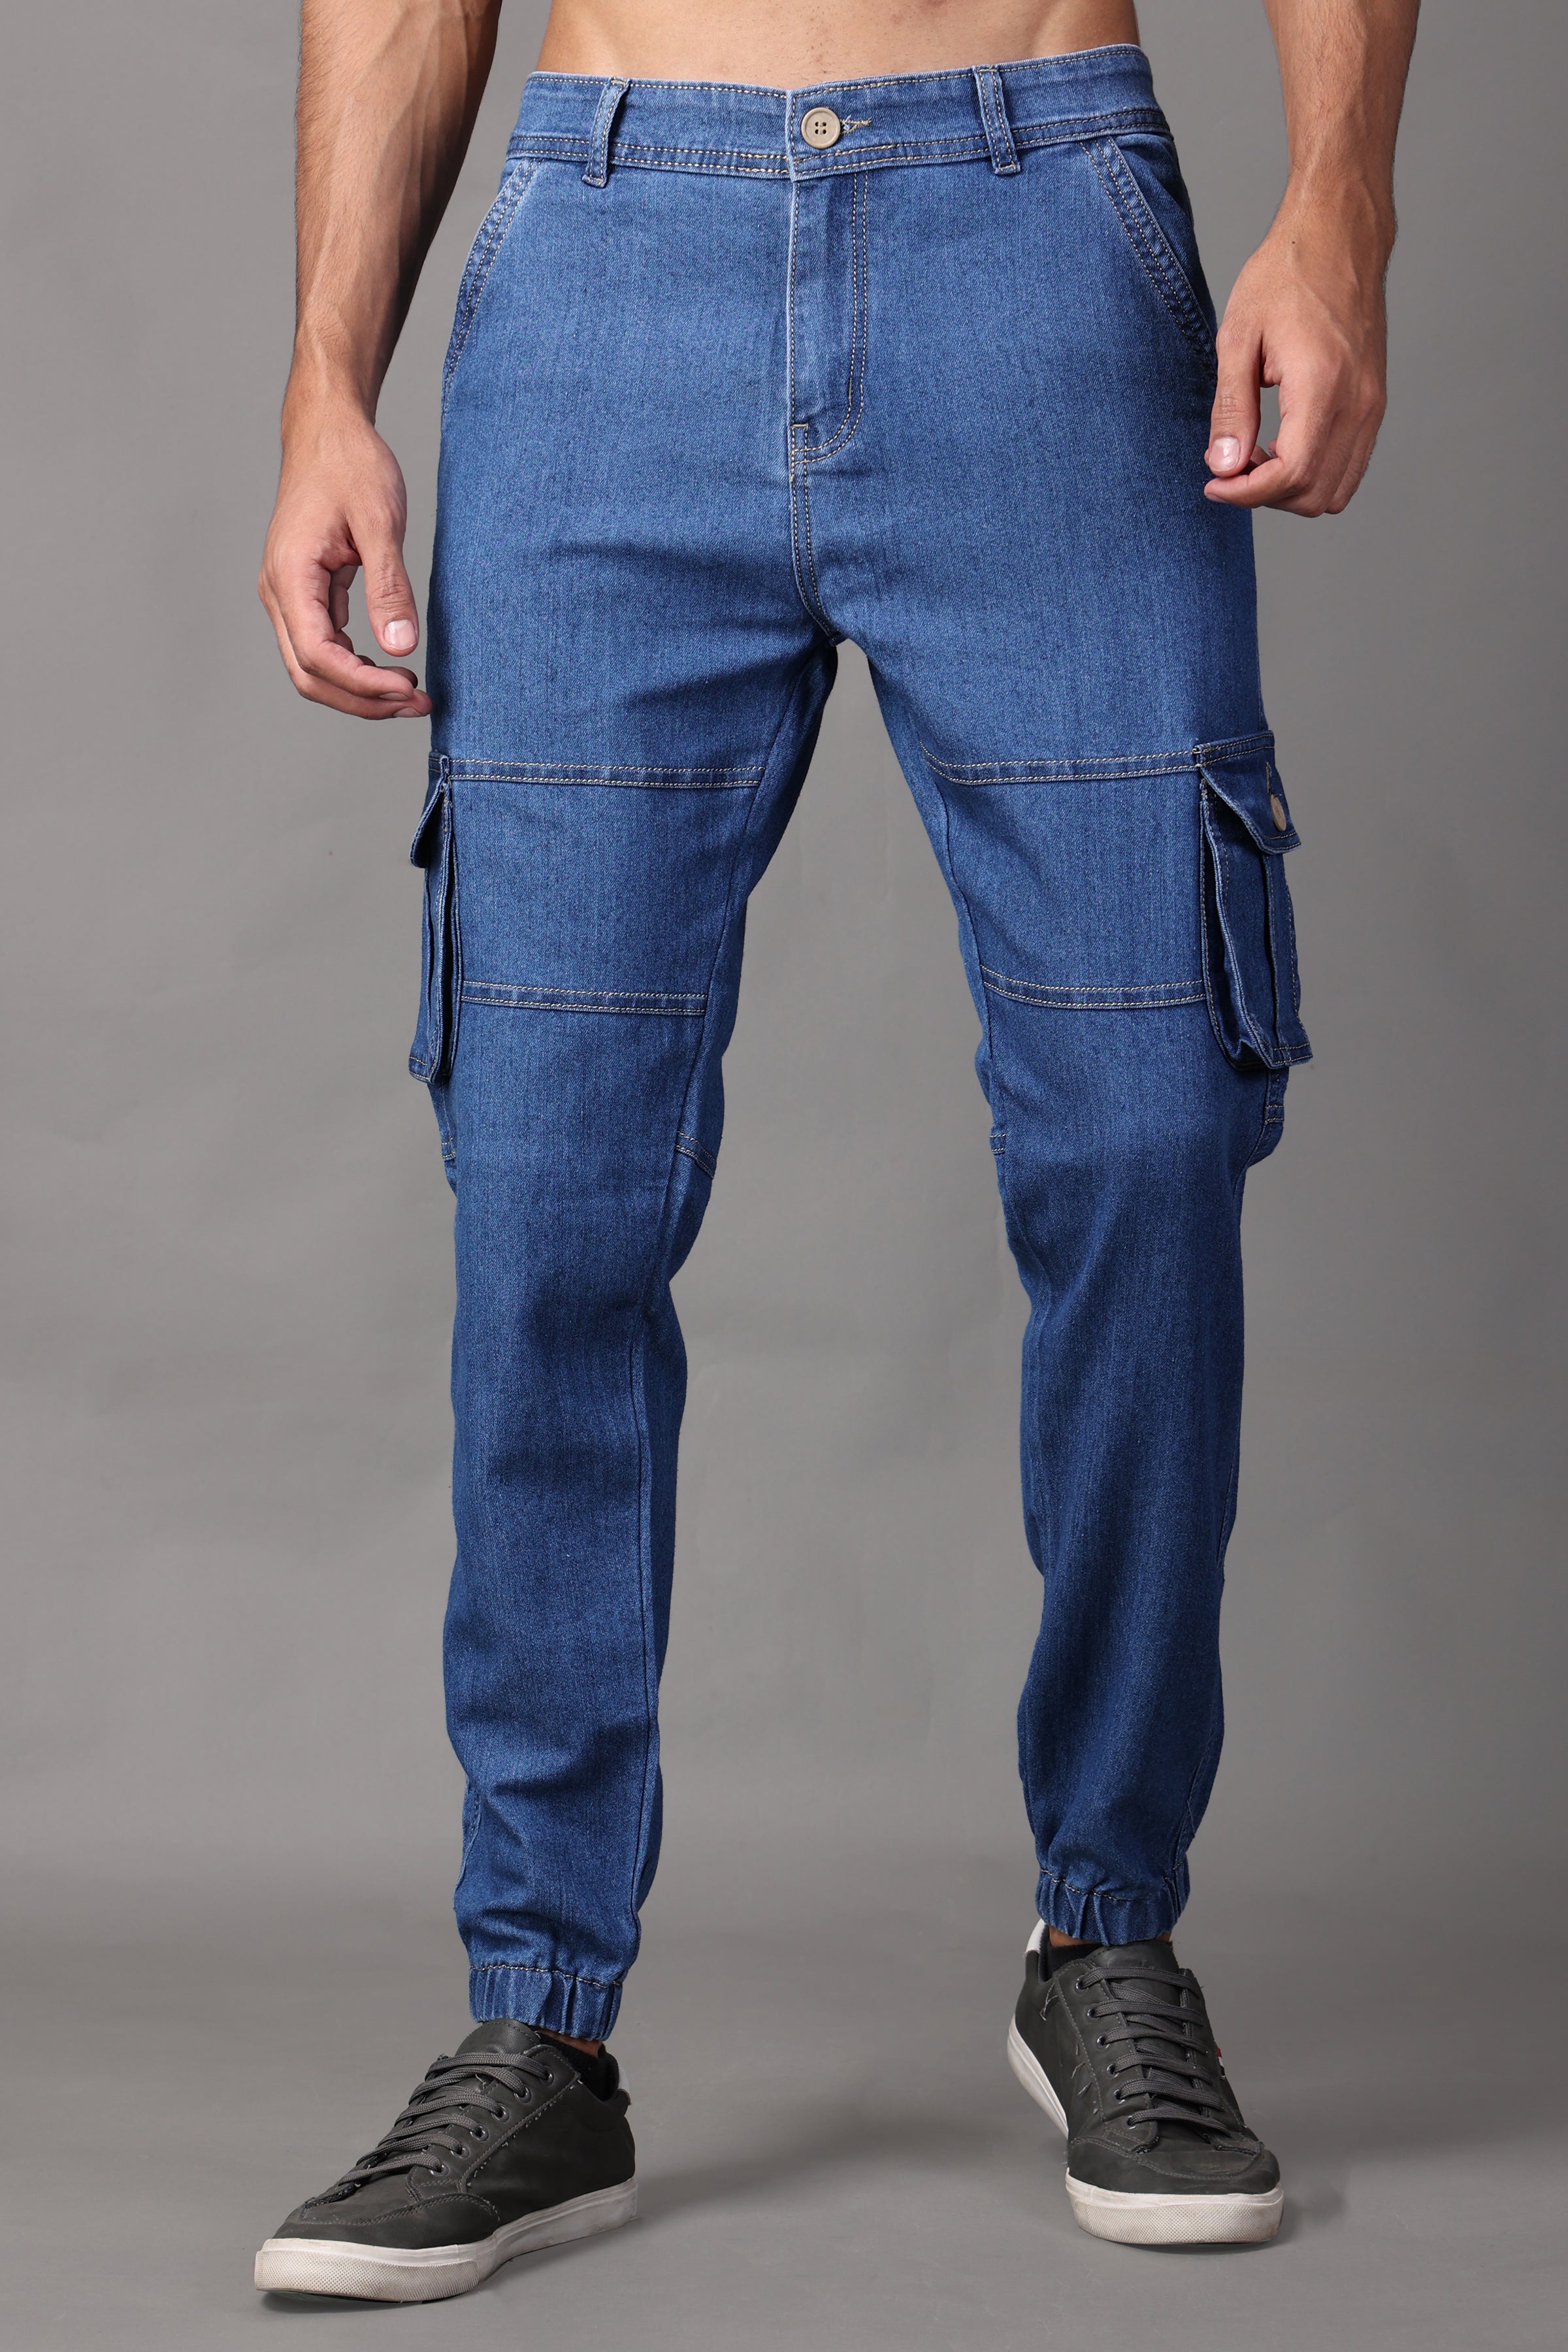 Slim Fit Plain 185 GSM Jacob Davis Men Denim Jeans, Grey at Rs 520/piece in  New Delhi